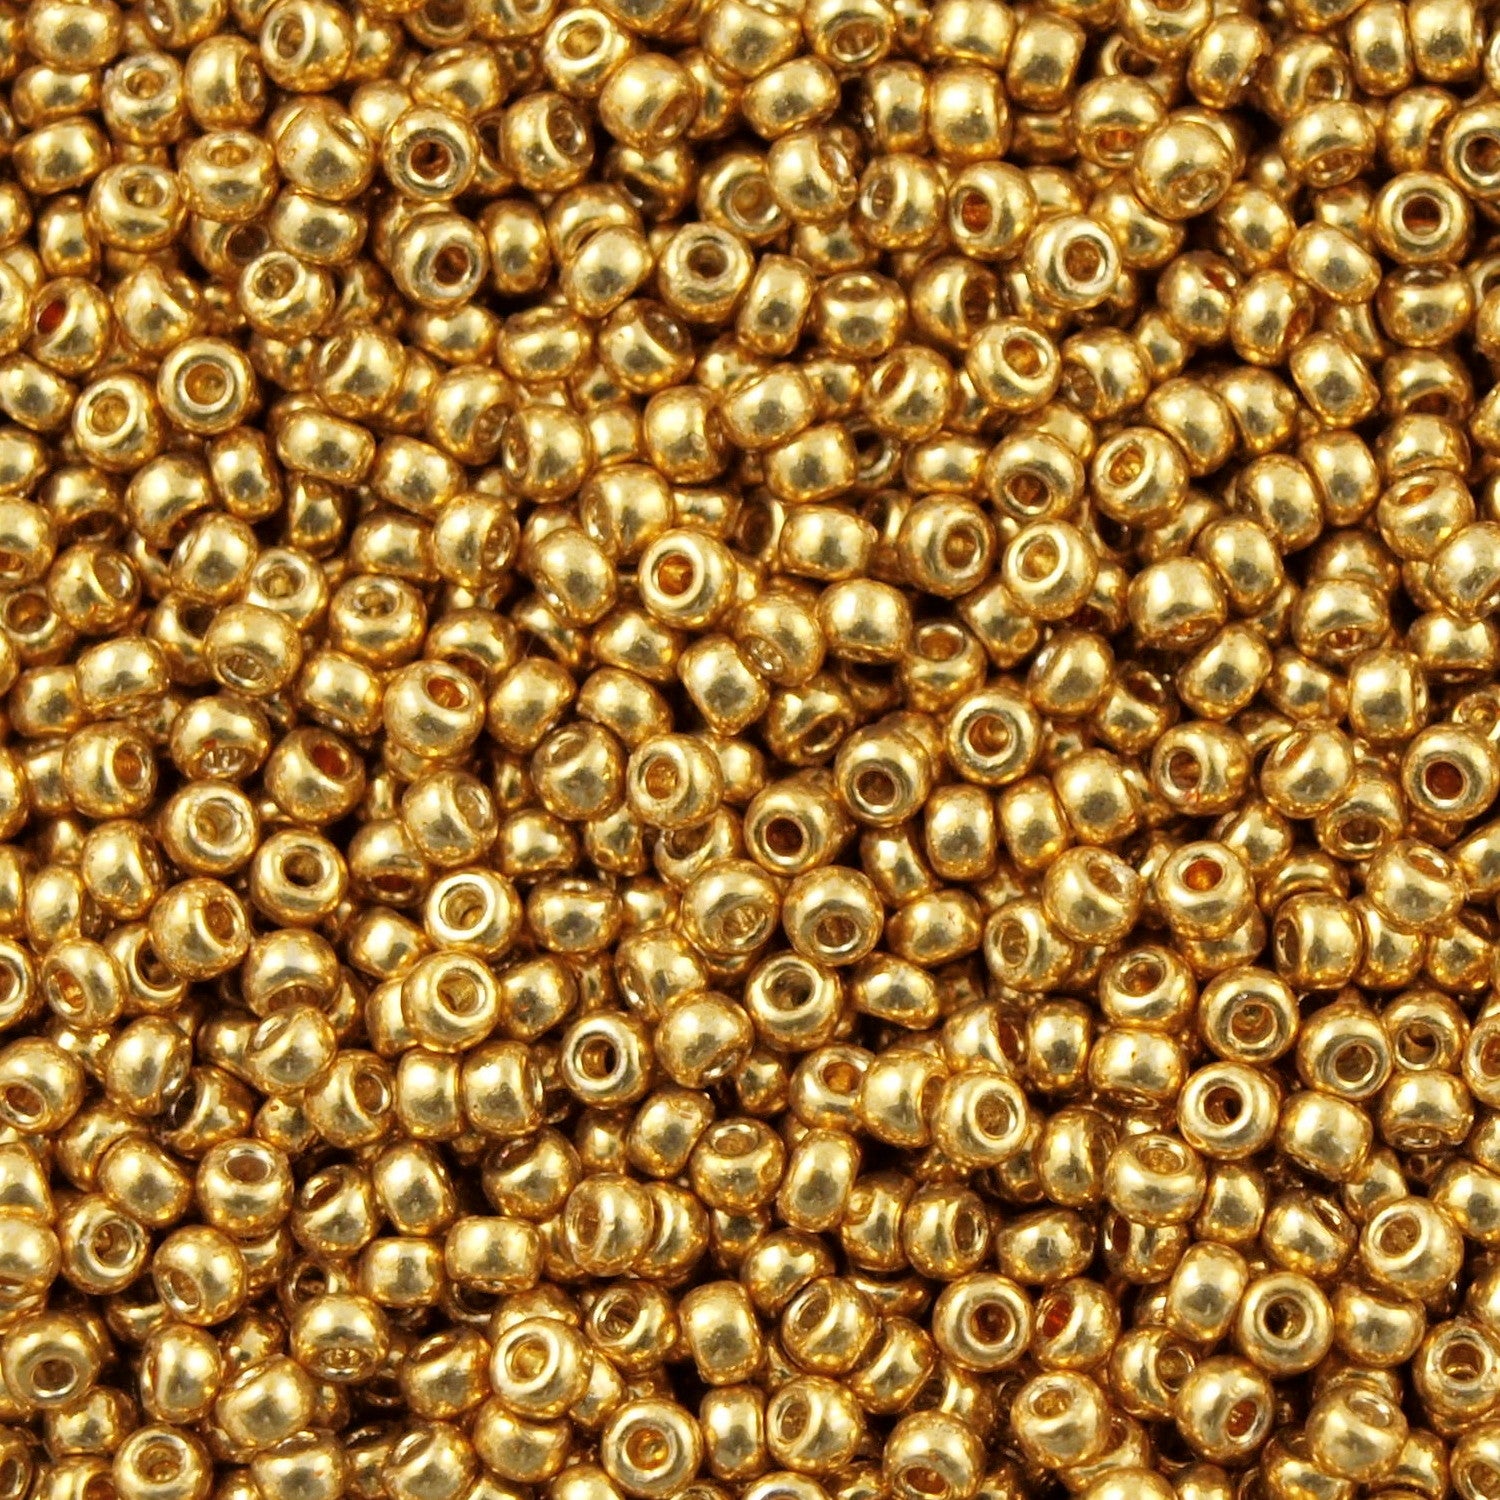 15-4202 Miyuki Seed Beads Size 15/0 Duracoat Galvanised Gold